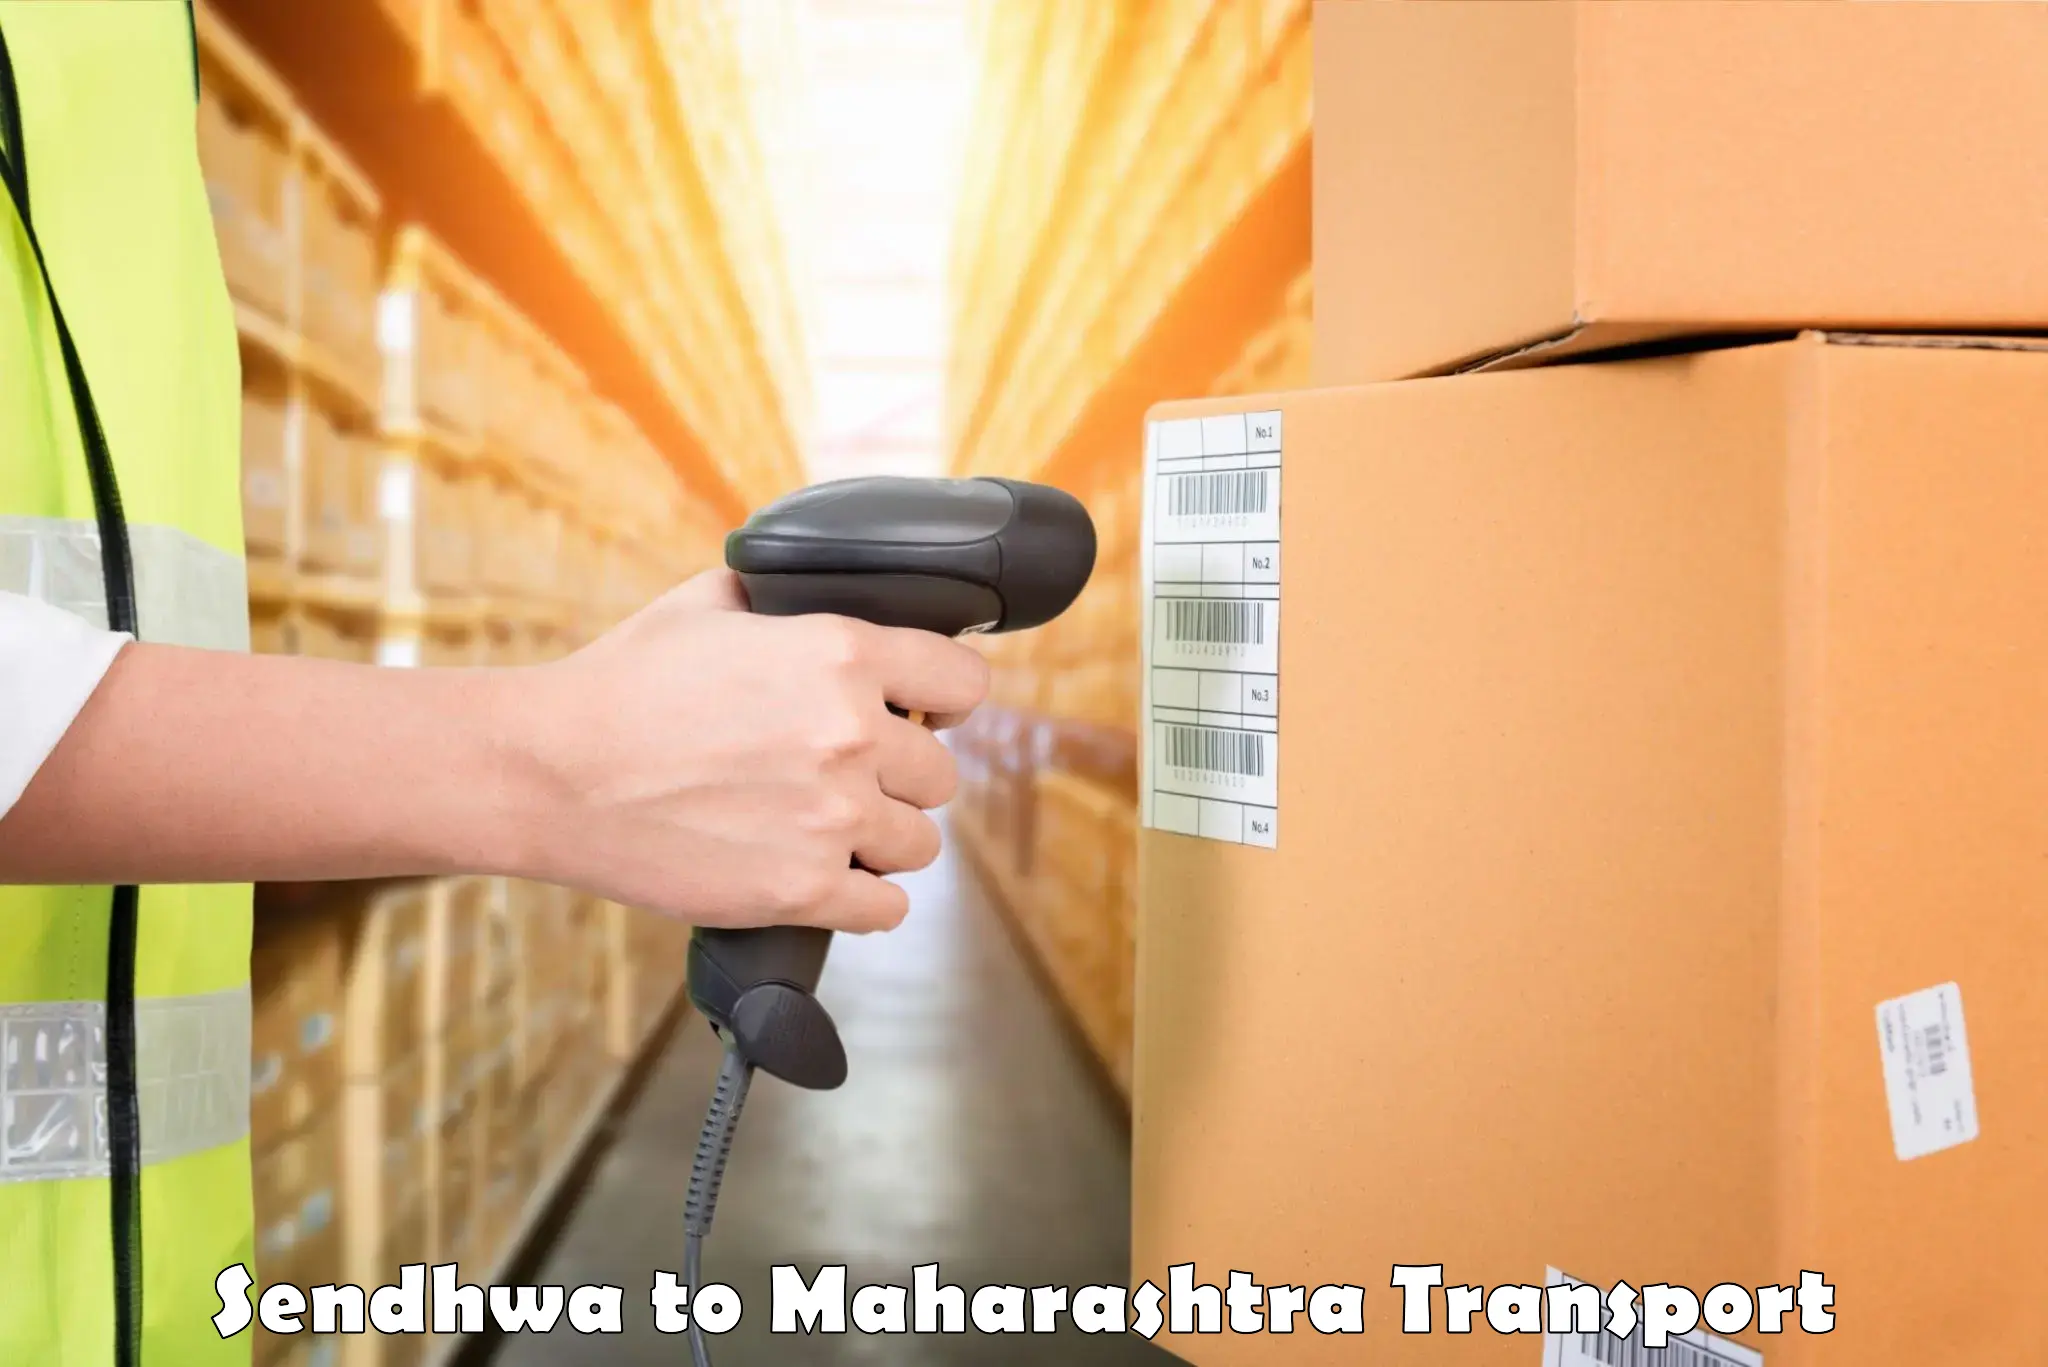 Truck transport companies in India Sendhwa to Bhandara